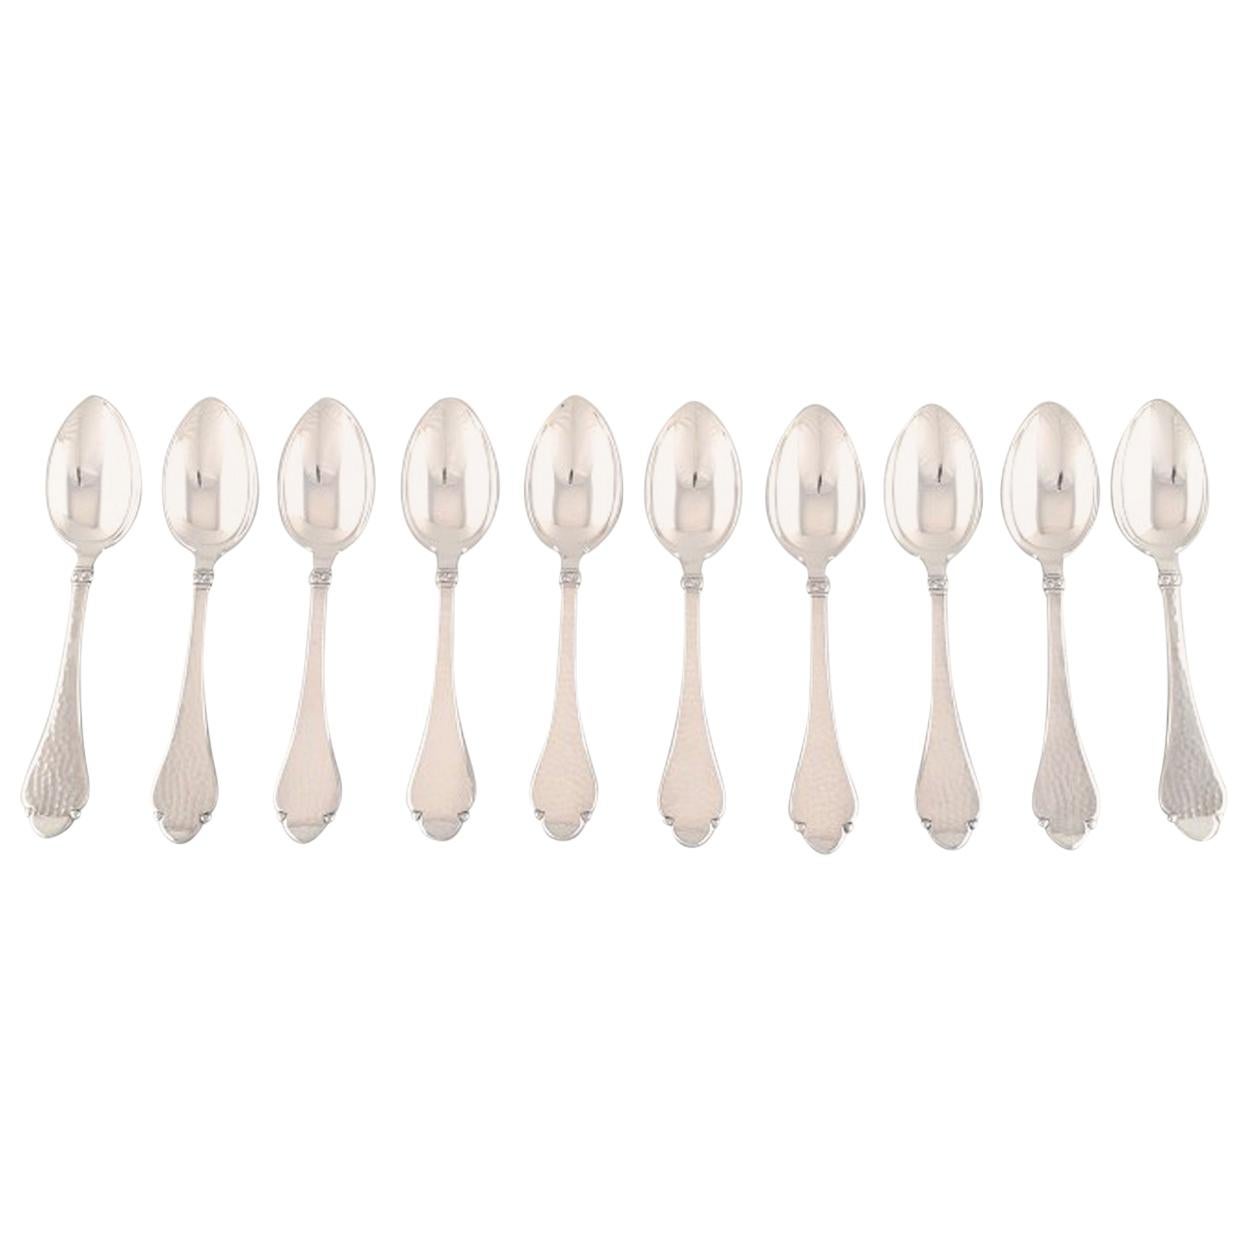 Horsens Silver, Denmark W & S Sørensen, 9 Pieces, Bernstoff Table Spoons